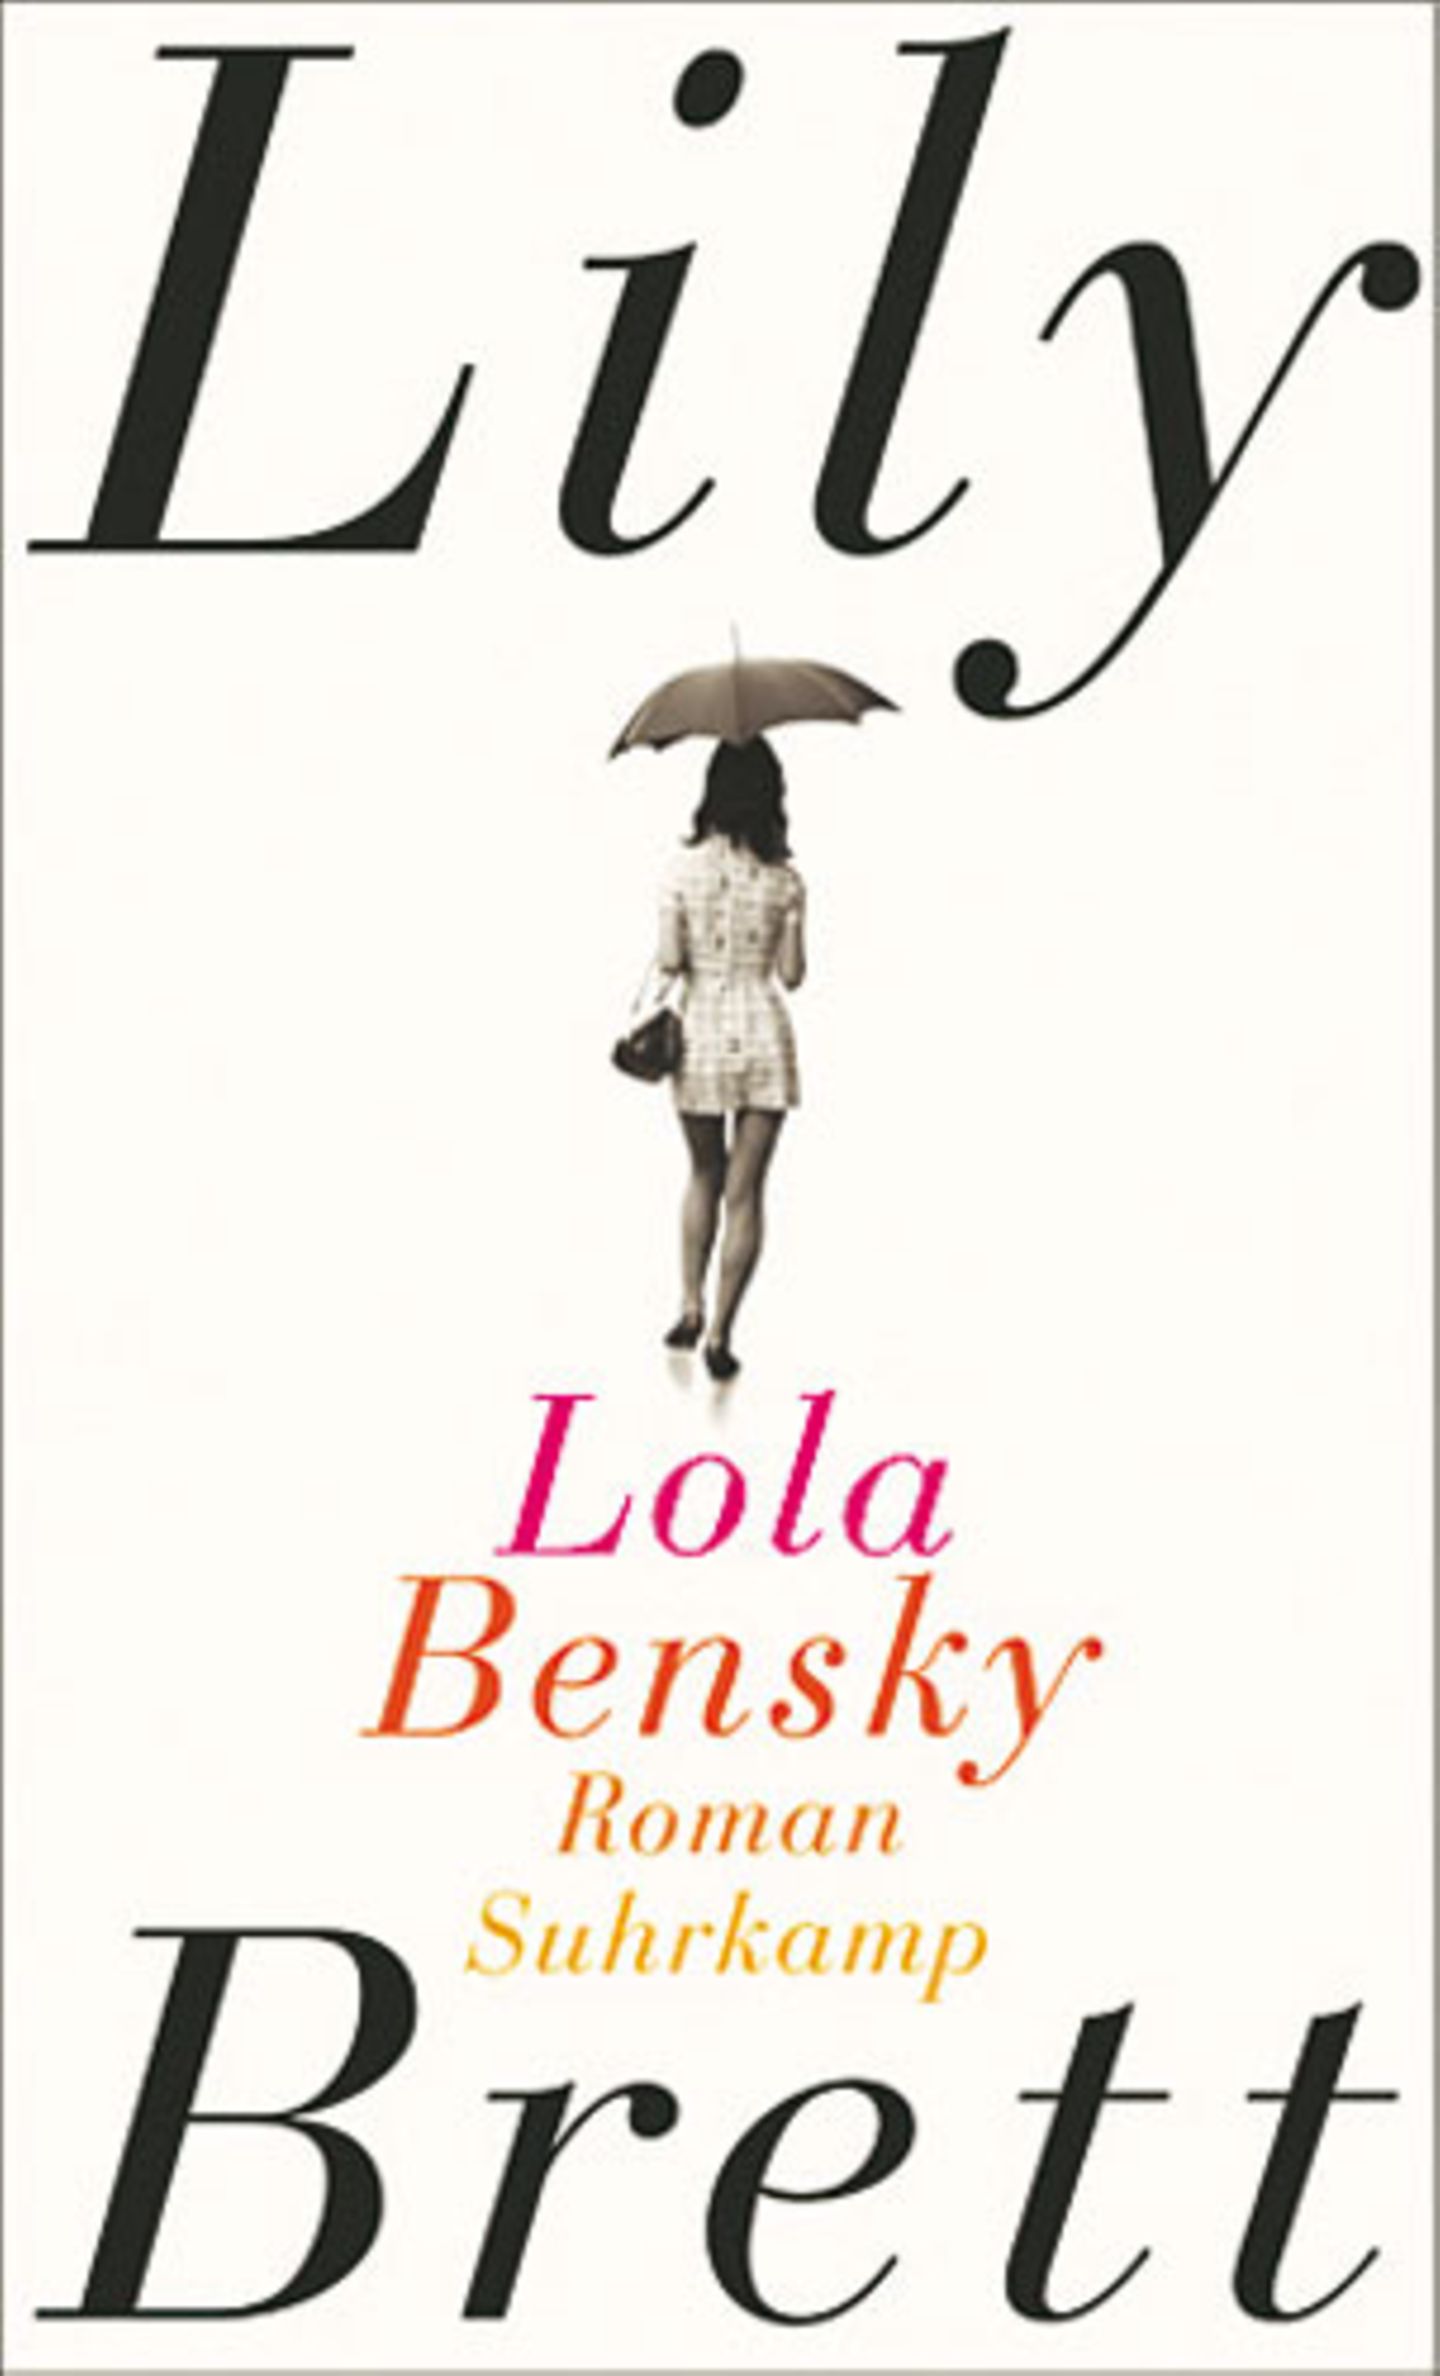 Lily Brett: Lola Bensky